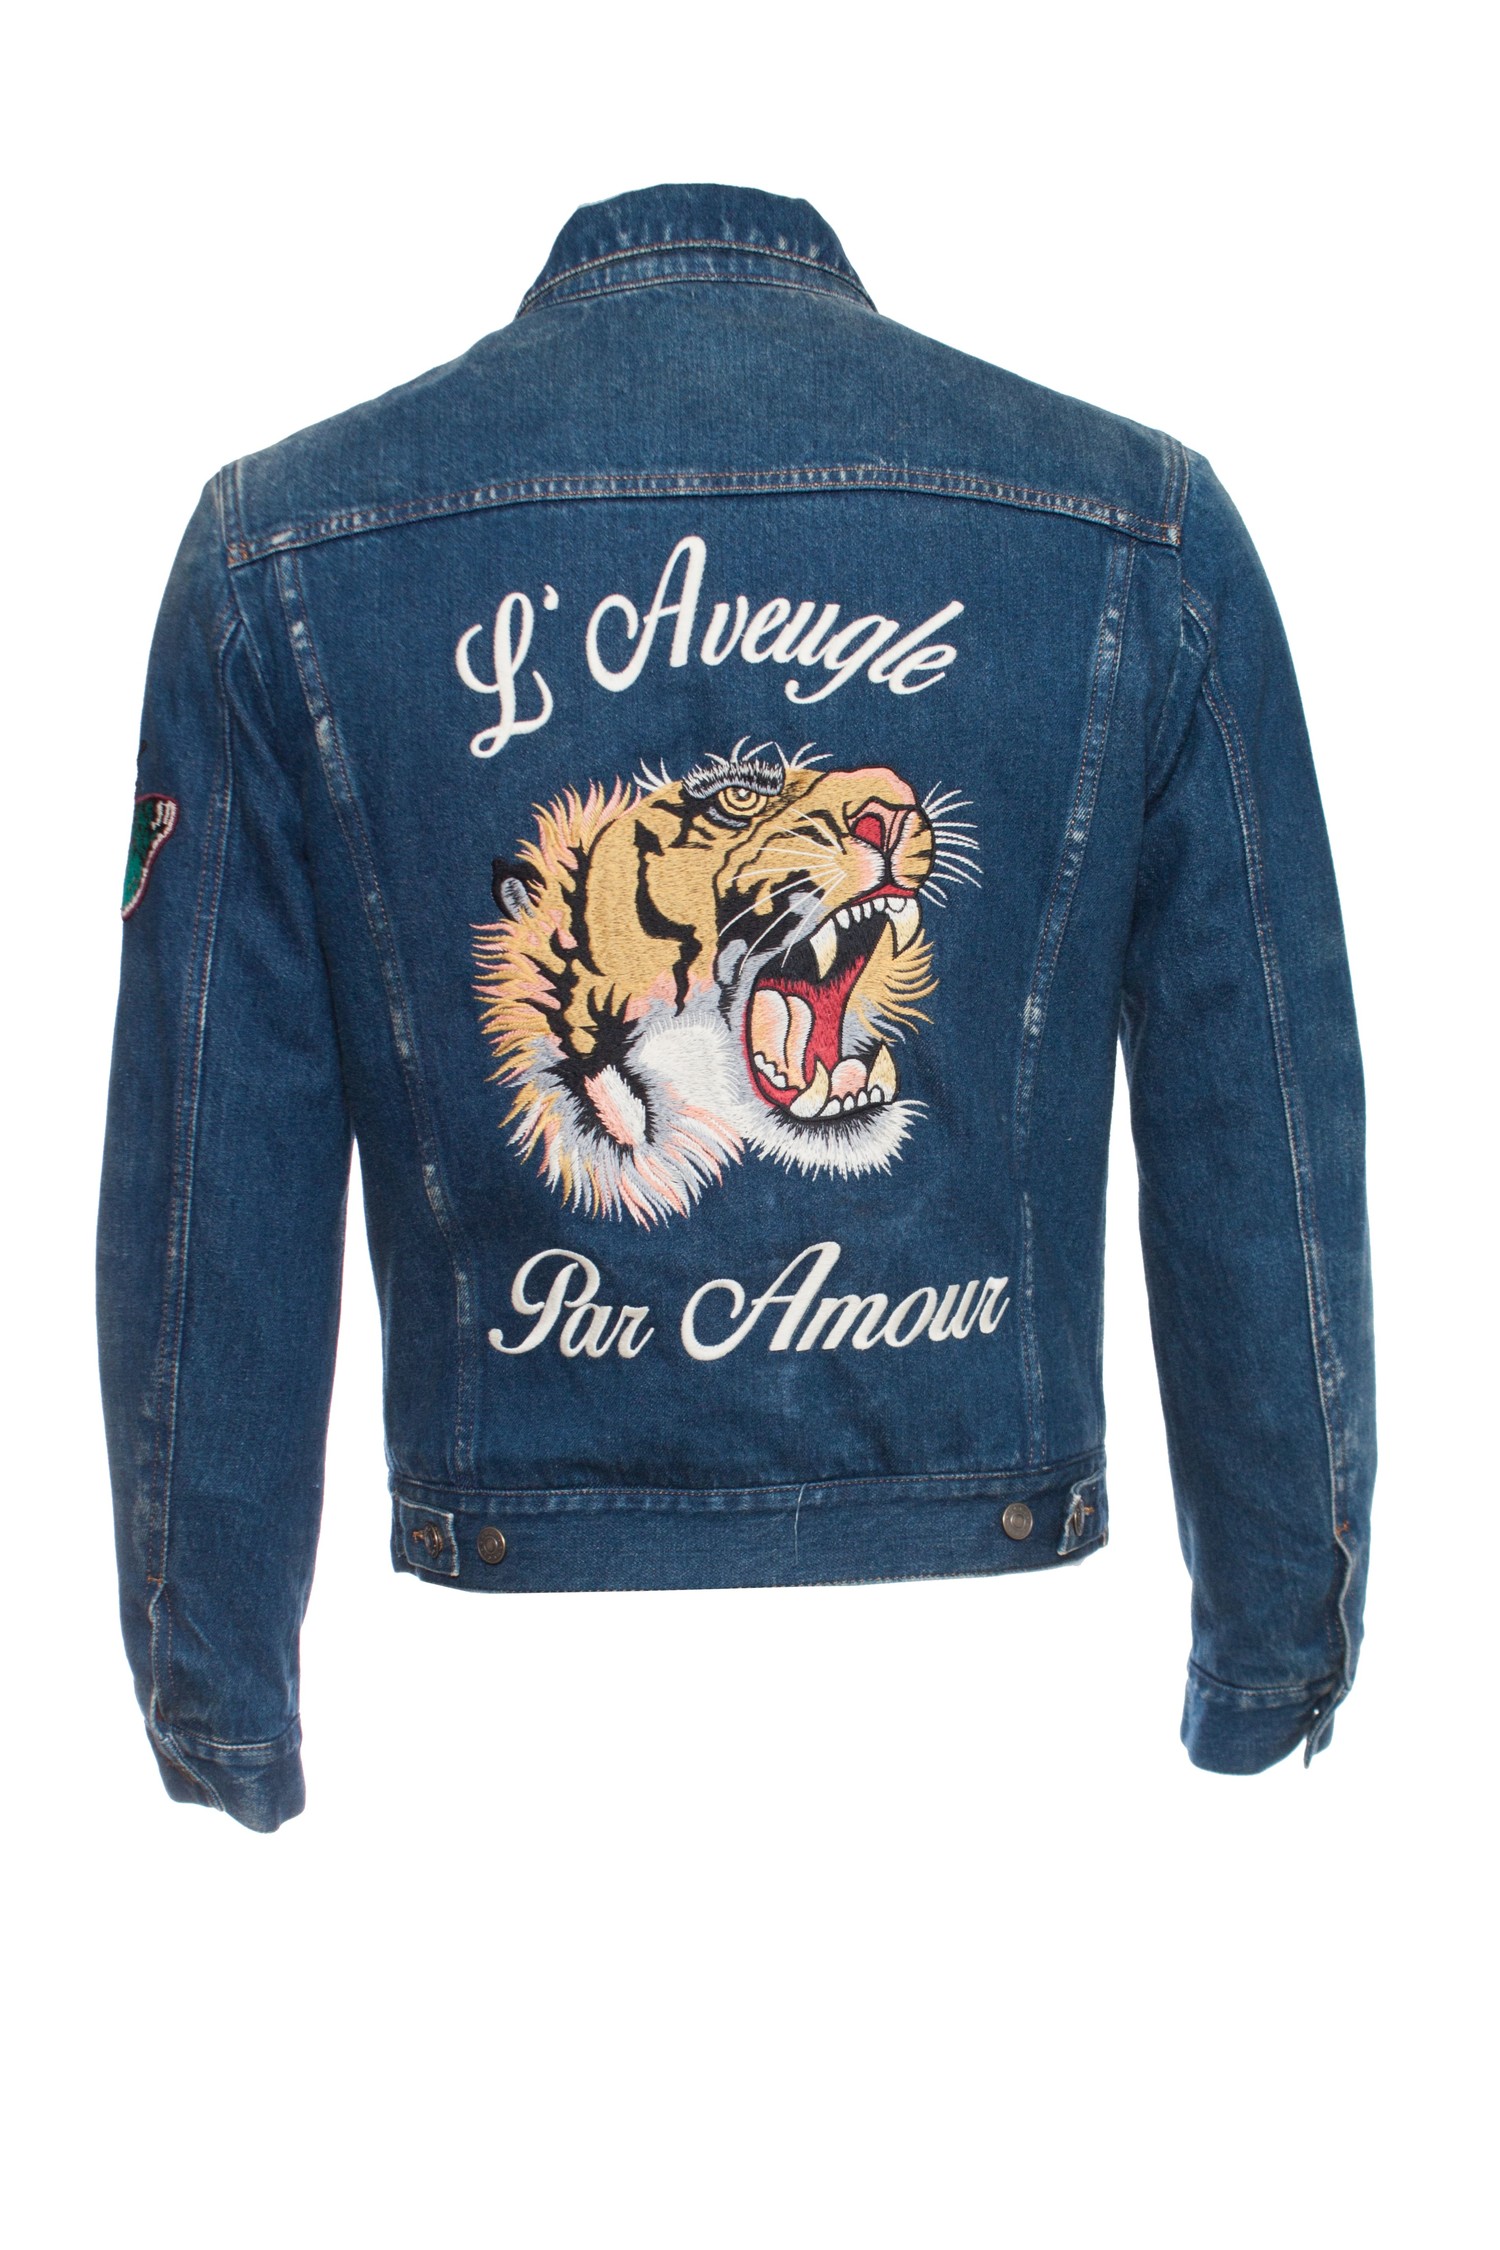 Gucci, Denim jacket with embroideries. - Designer